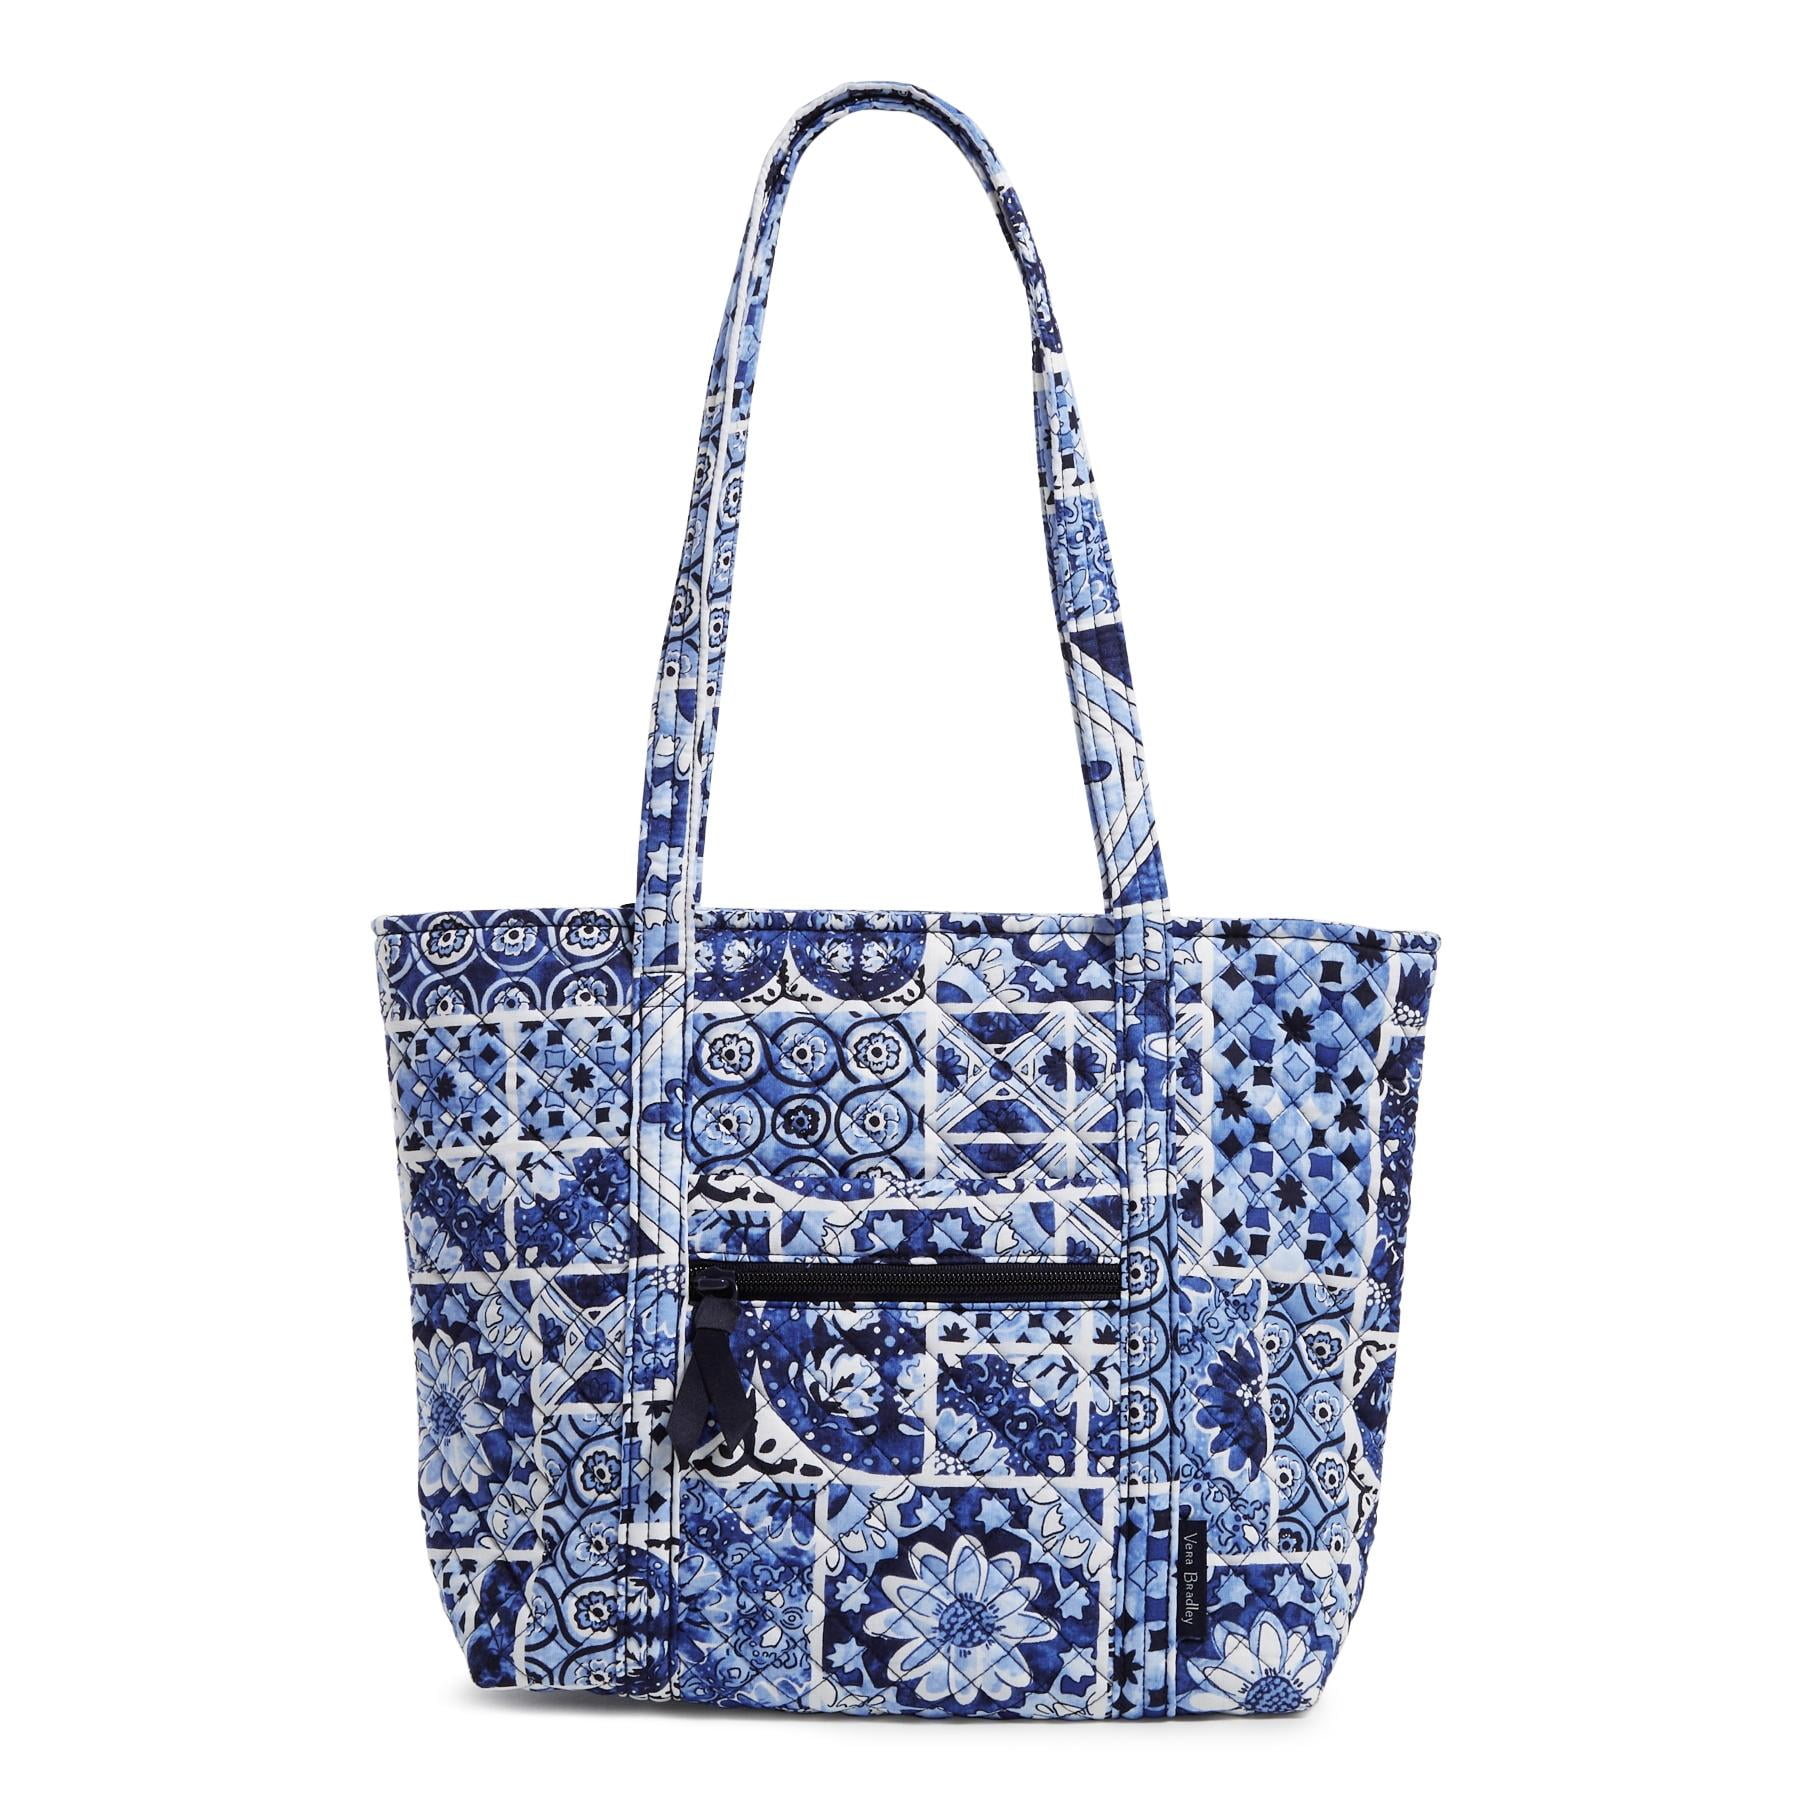 Vera Bradley Baby Bag, Blue Tapestry, Blue, white - $86 New With